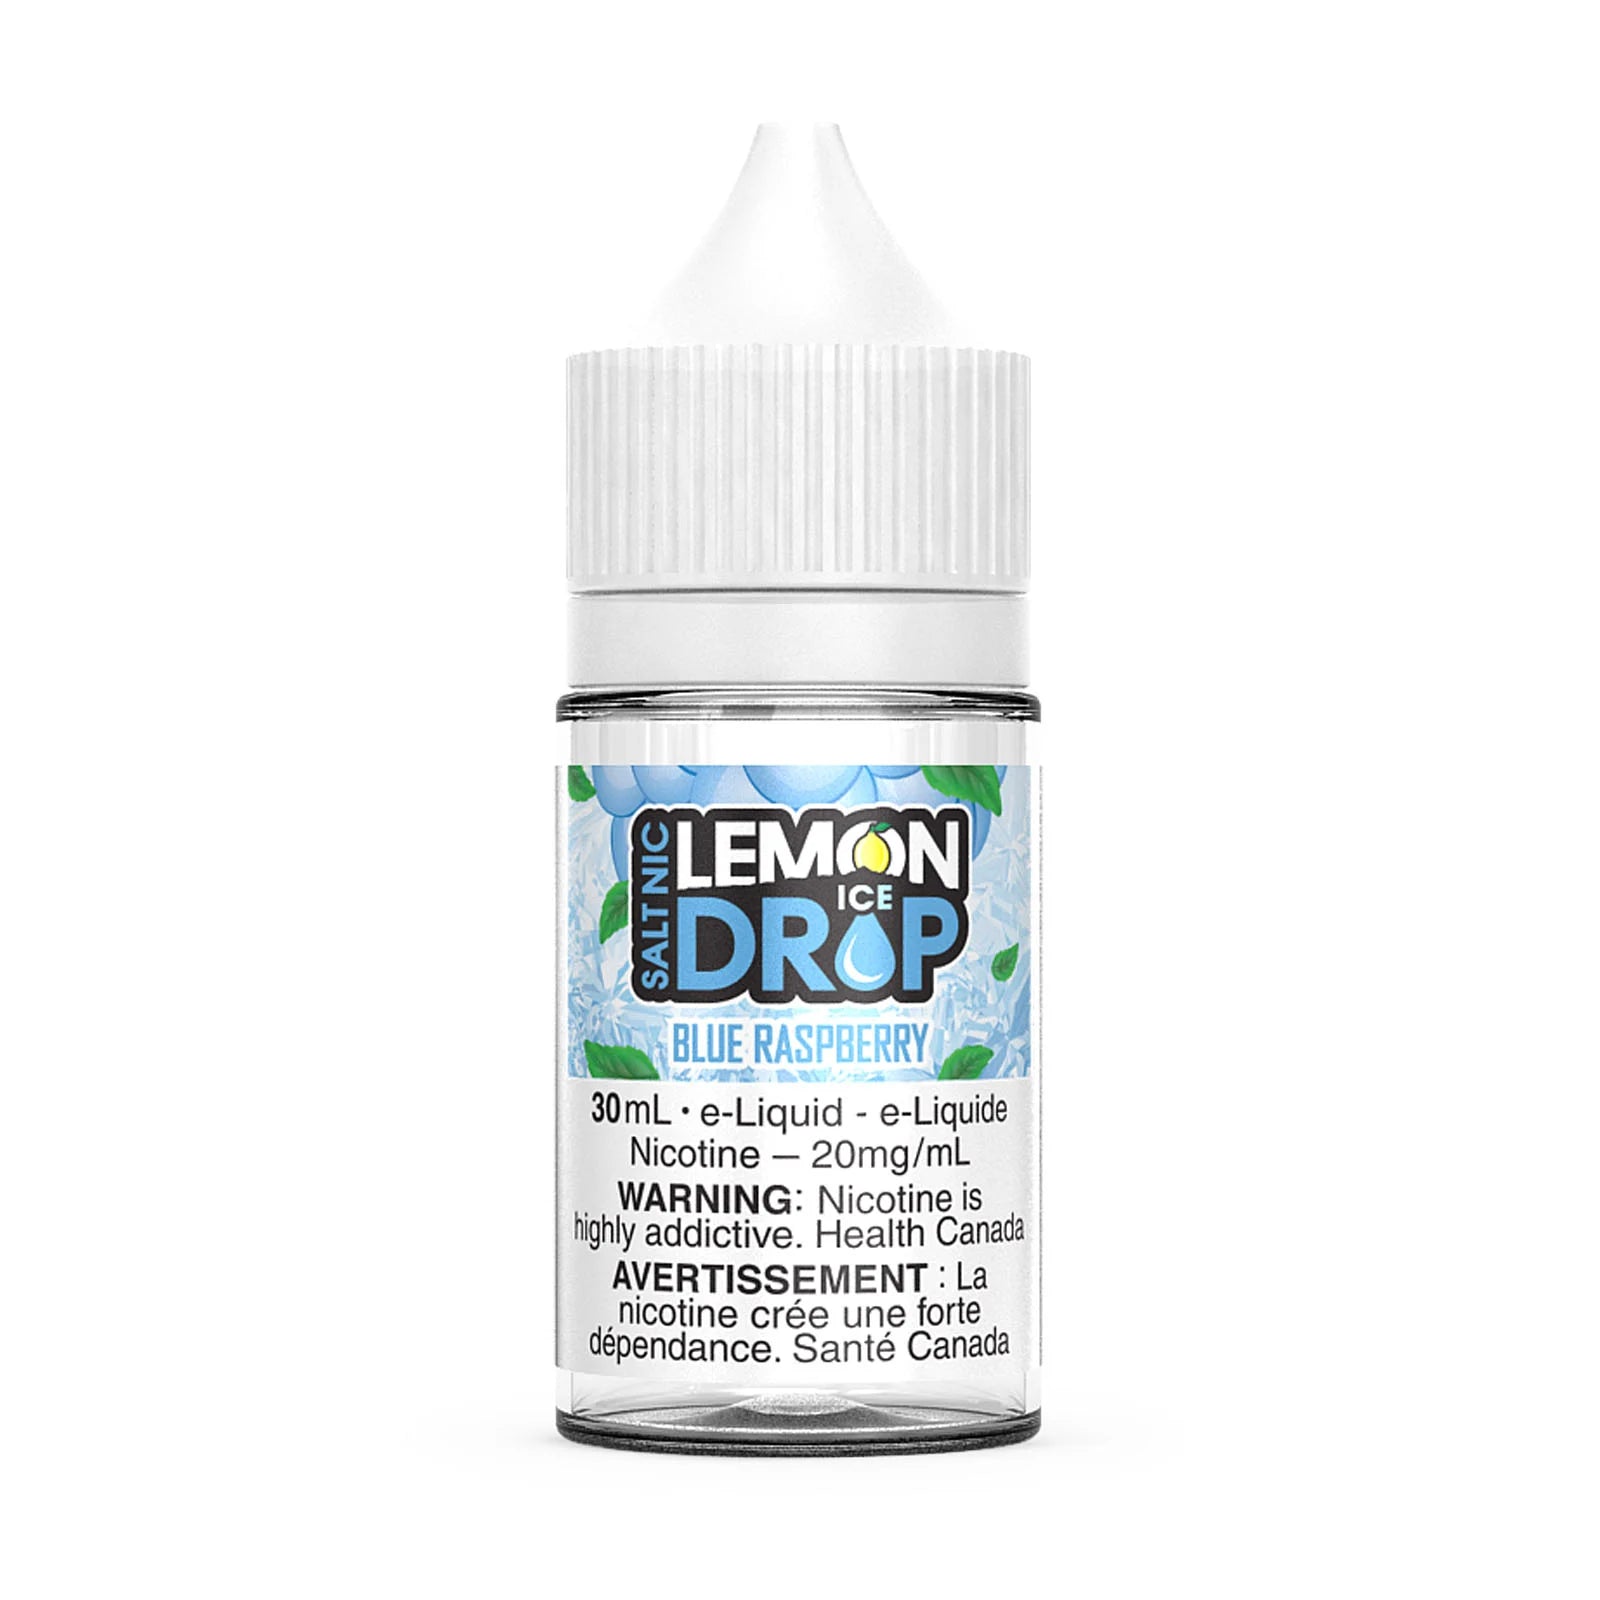 Lemon Drop - Blue Raspberry Lemonade Ice Salt 30ml